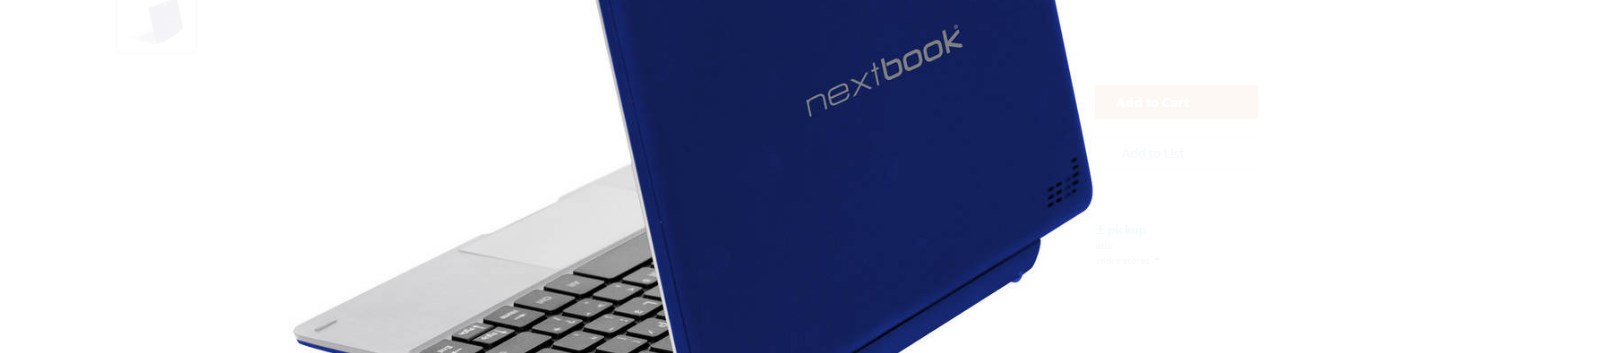 Nextbook Flexx 10.1â€³ 2-in-1 32GB tablet for $100